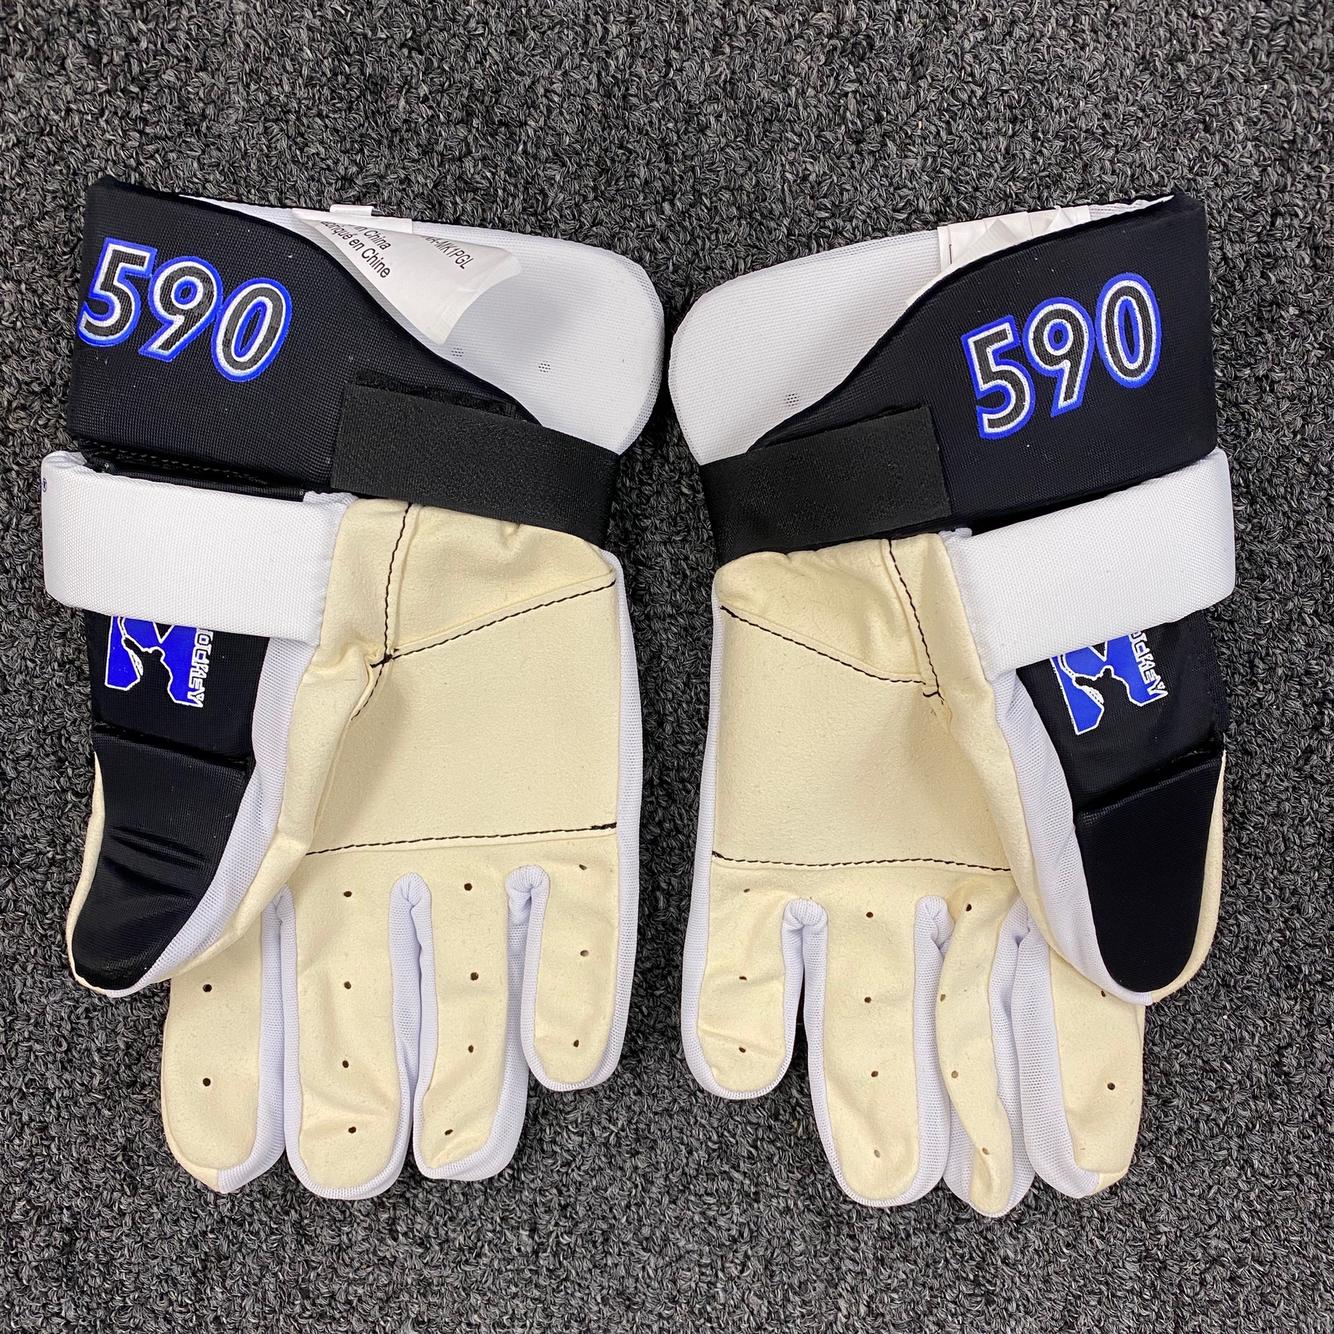 Mylec MK1 Player Street Hockey Gloves Senior size M retails $35 